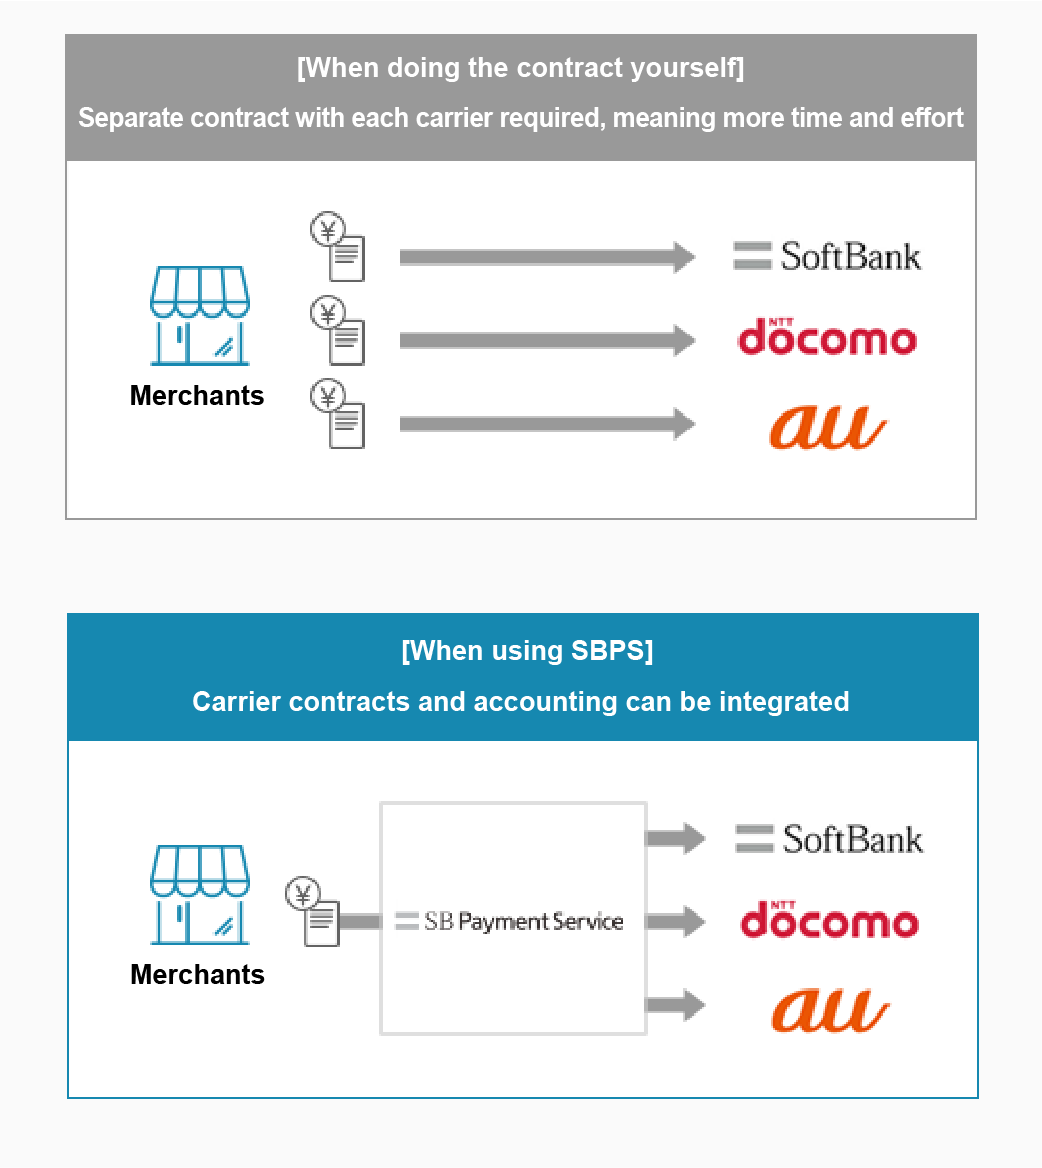 Mobile carrier billing sample diagram